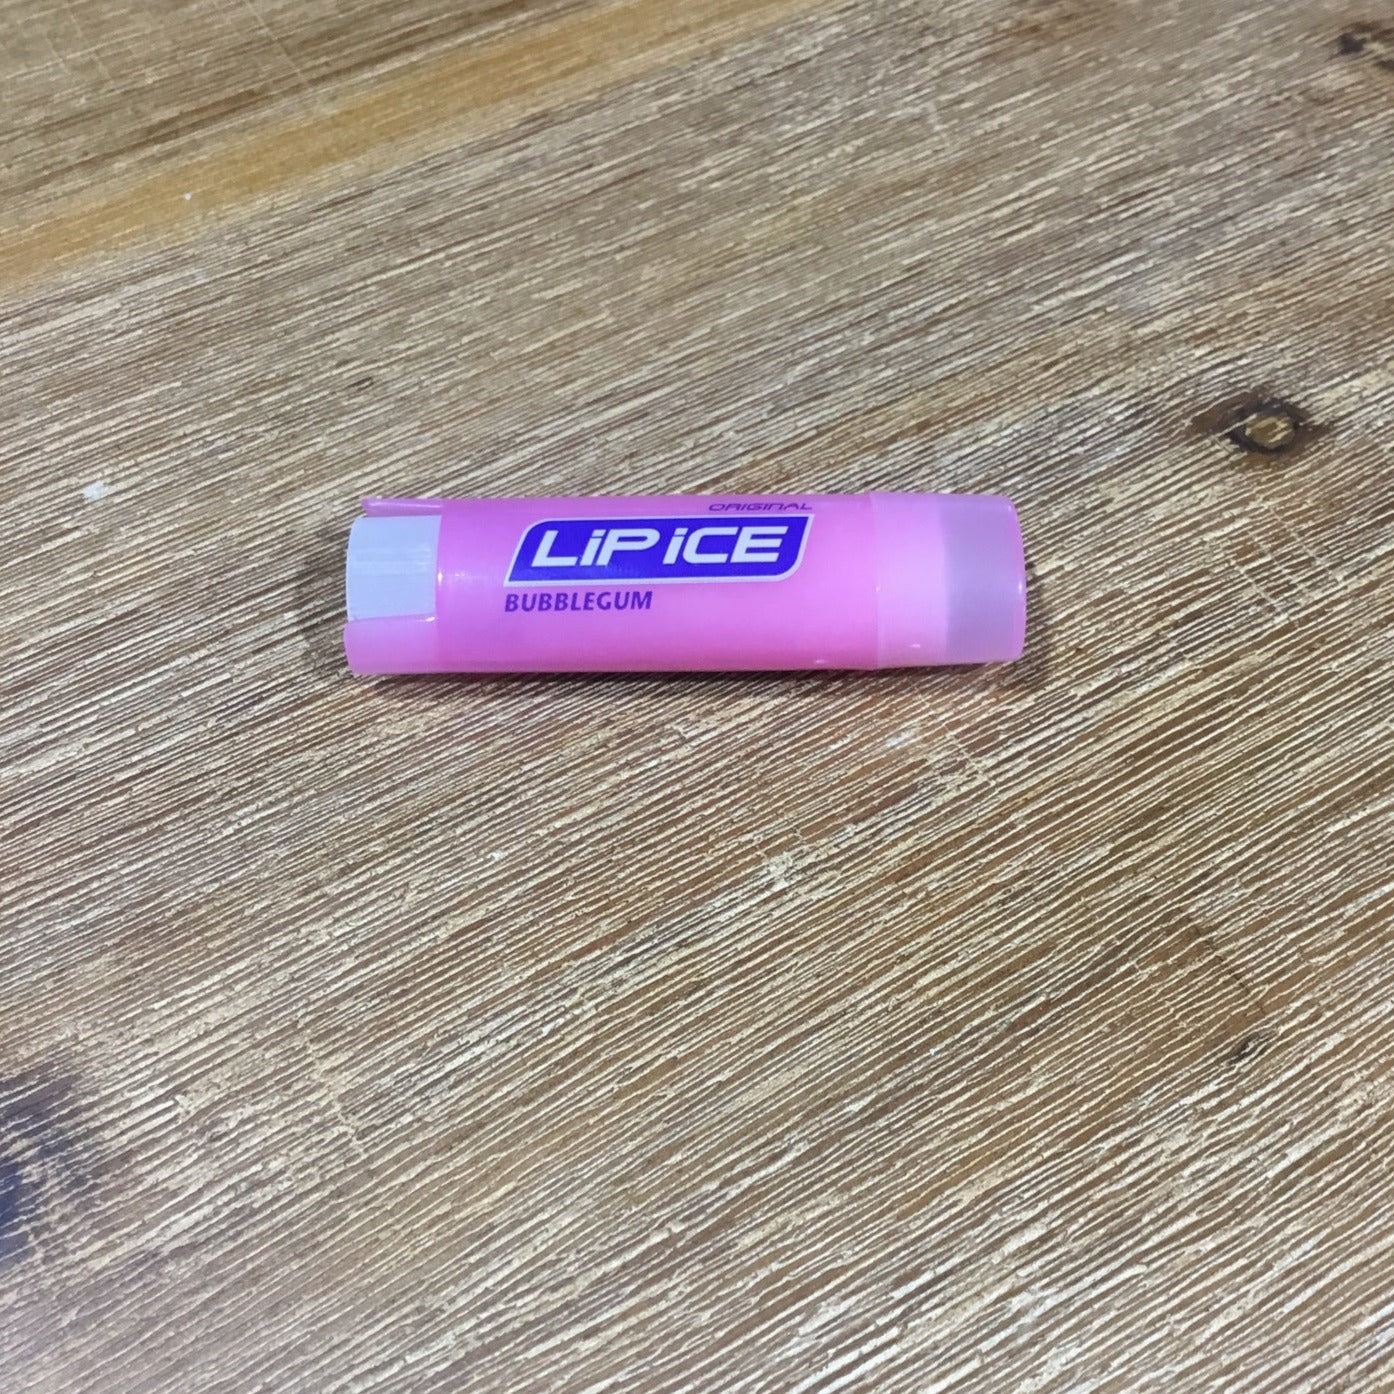 Vaseline Lip Ice Assorted Tray